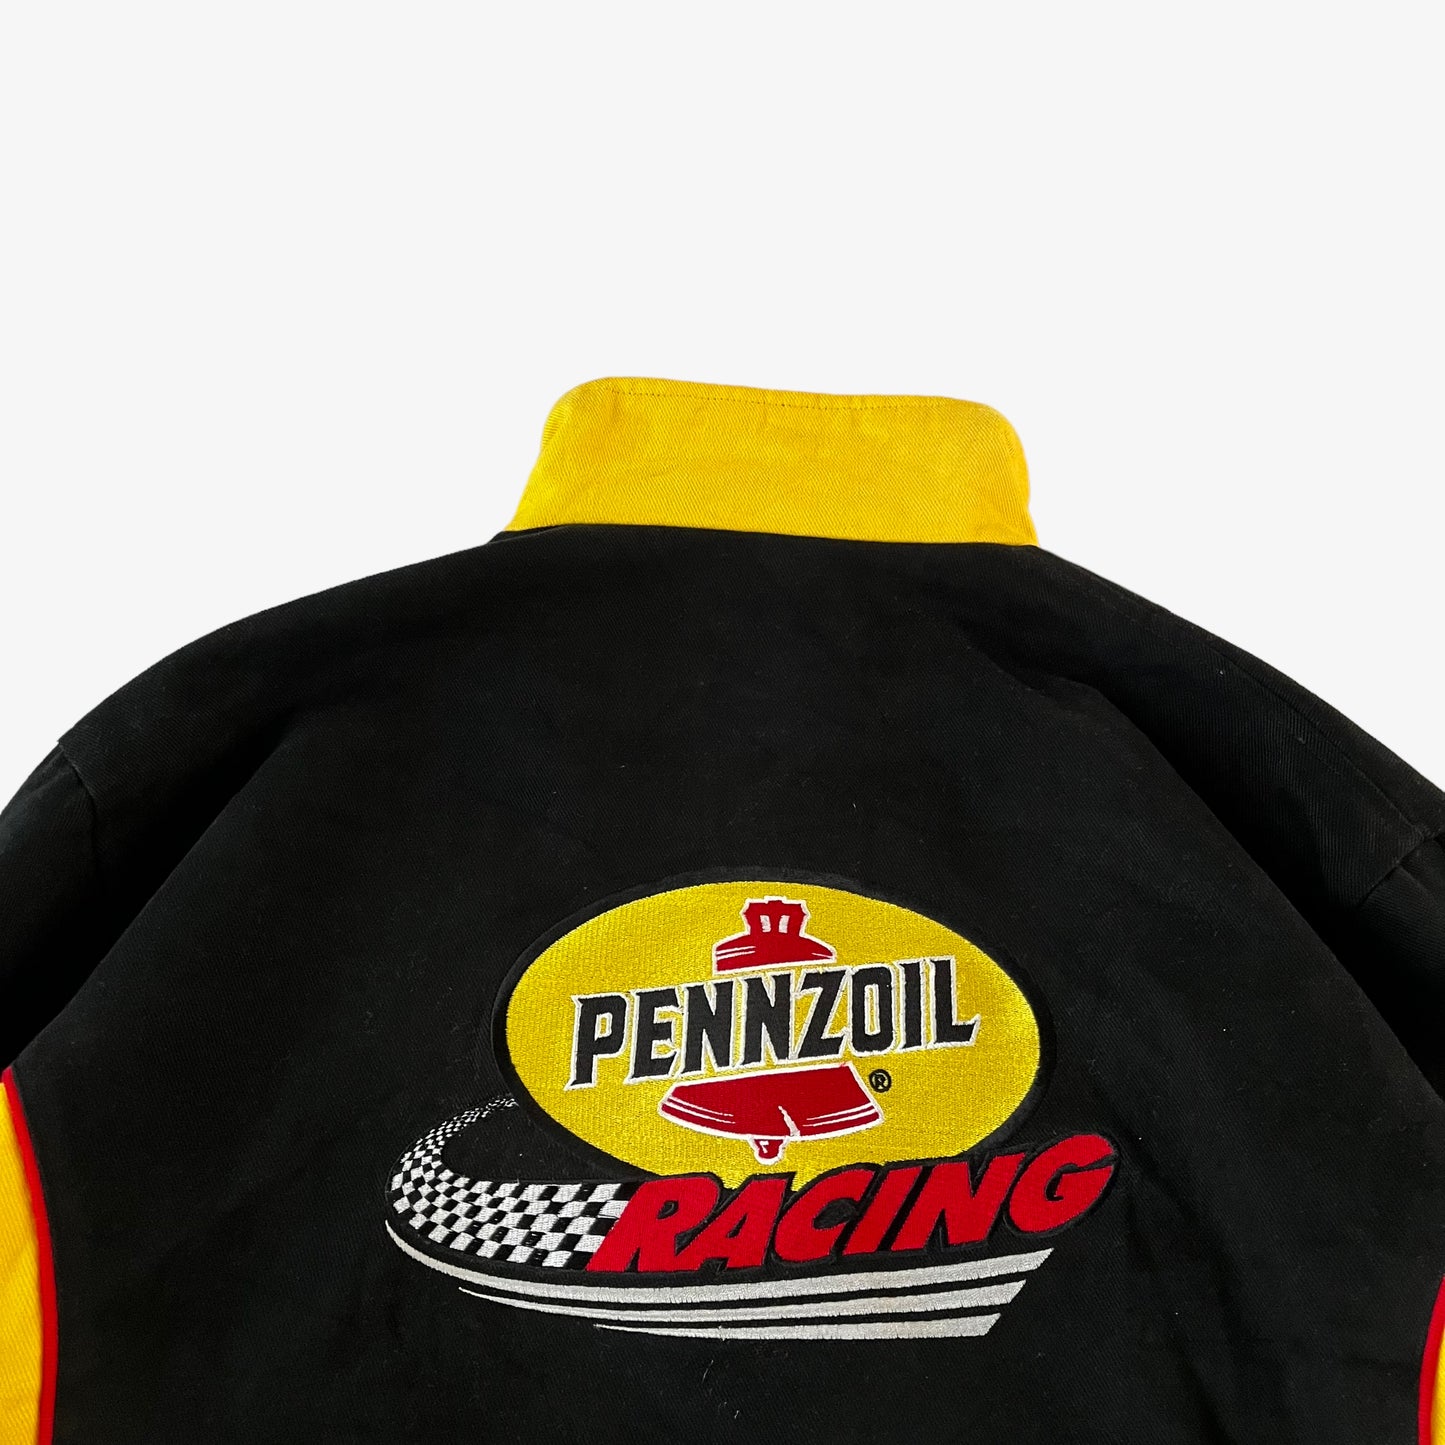 Vintage 90s Pennzoil Racing Team Nascar Jacket Logo - Casspios Dream